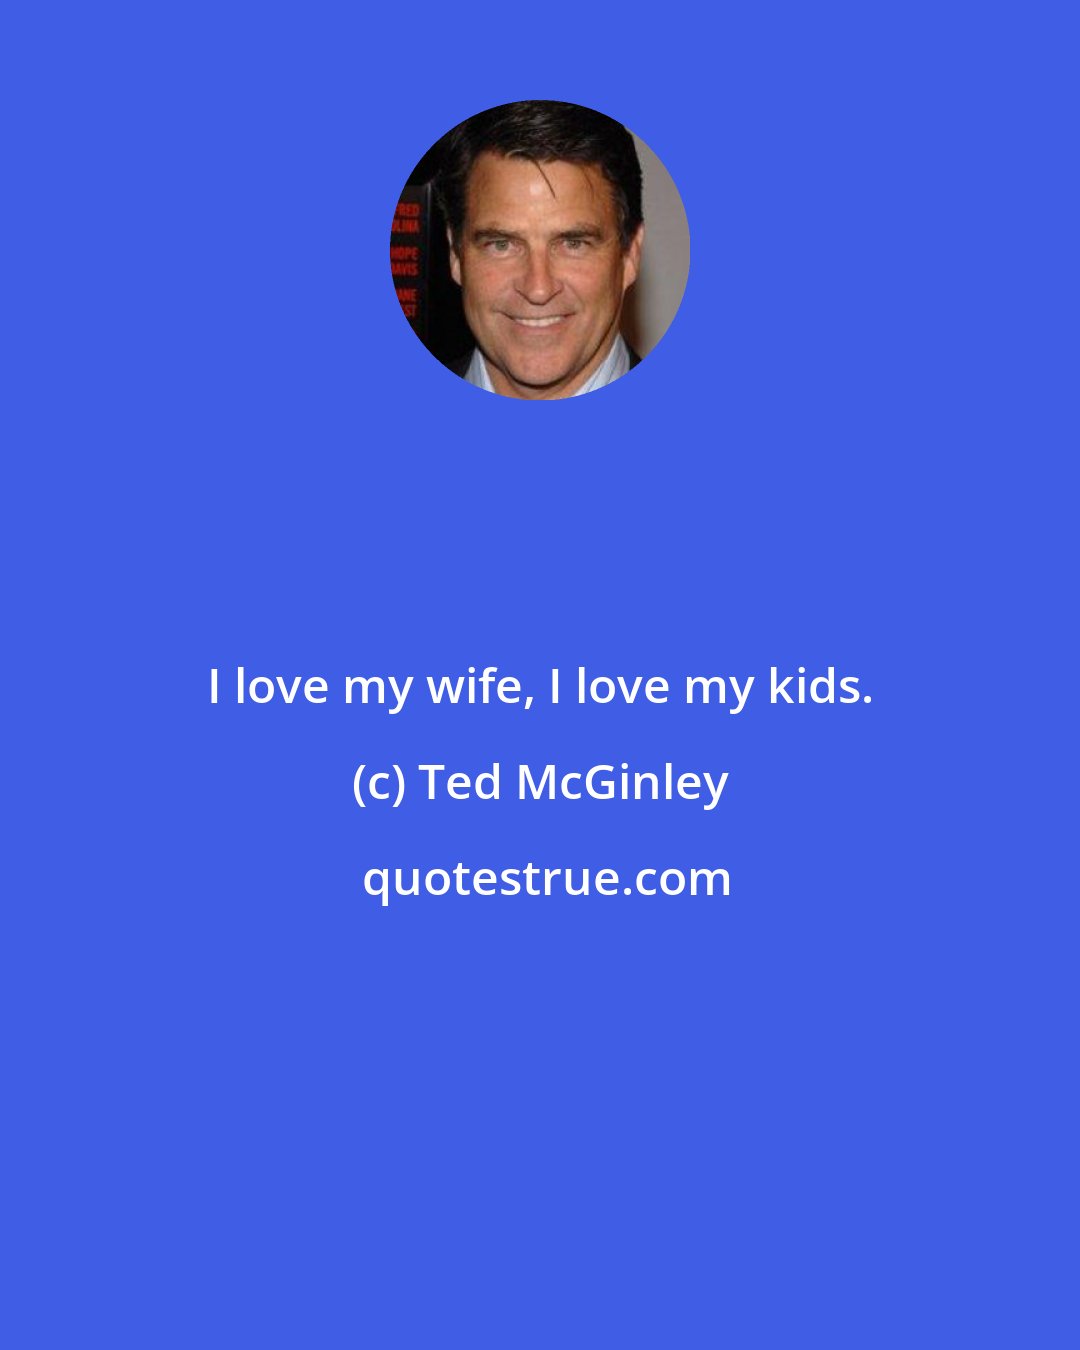 Ted McGinley: I love my wife, I love my kids.